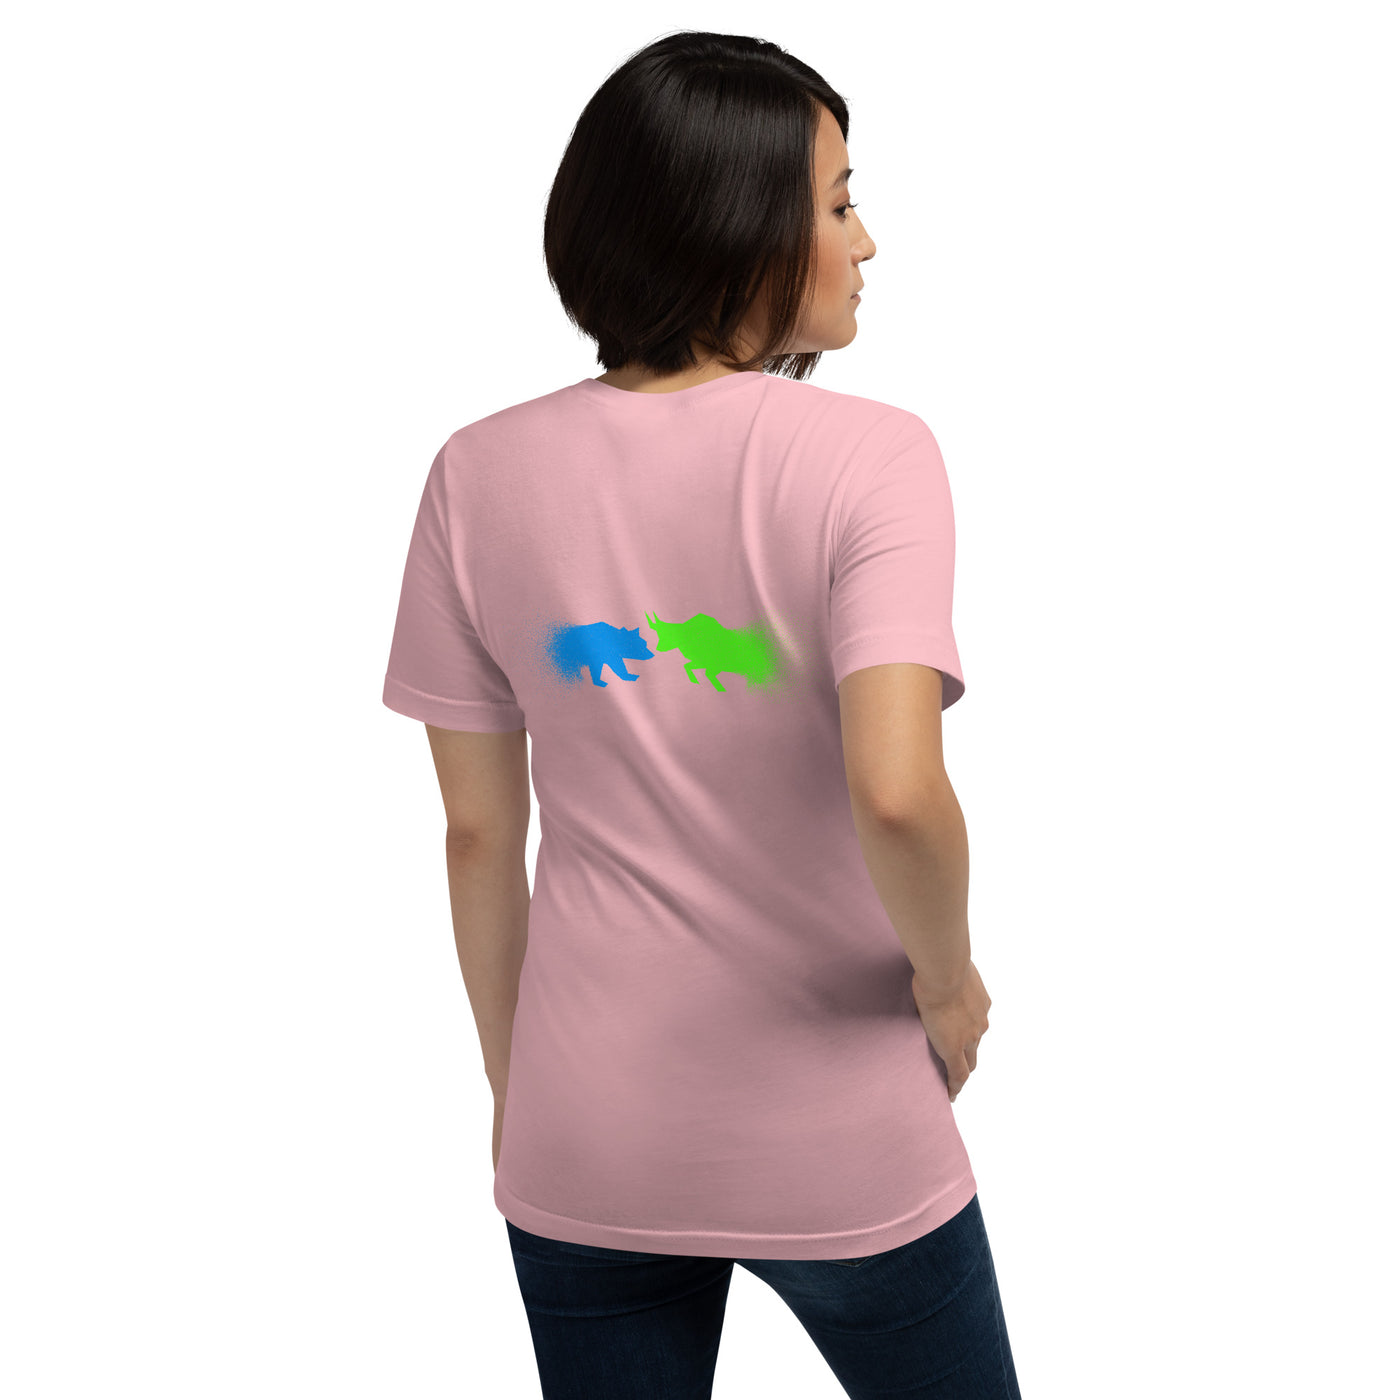 Bearish And Bullish (DB) in Light color - Unisex t-shirt ( Back Print )